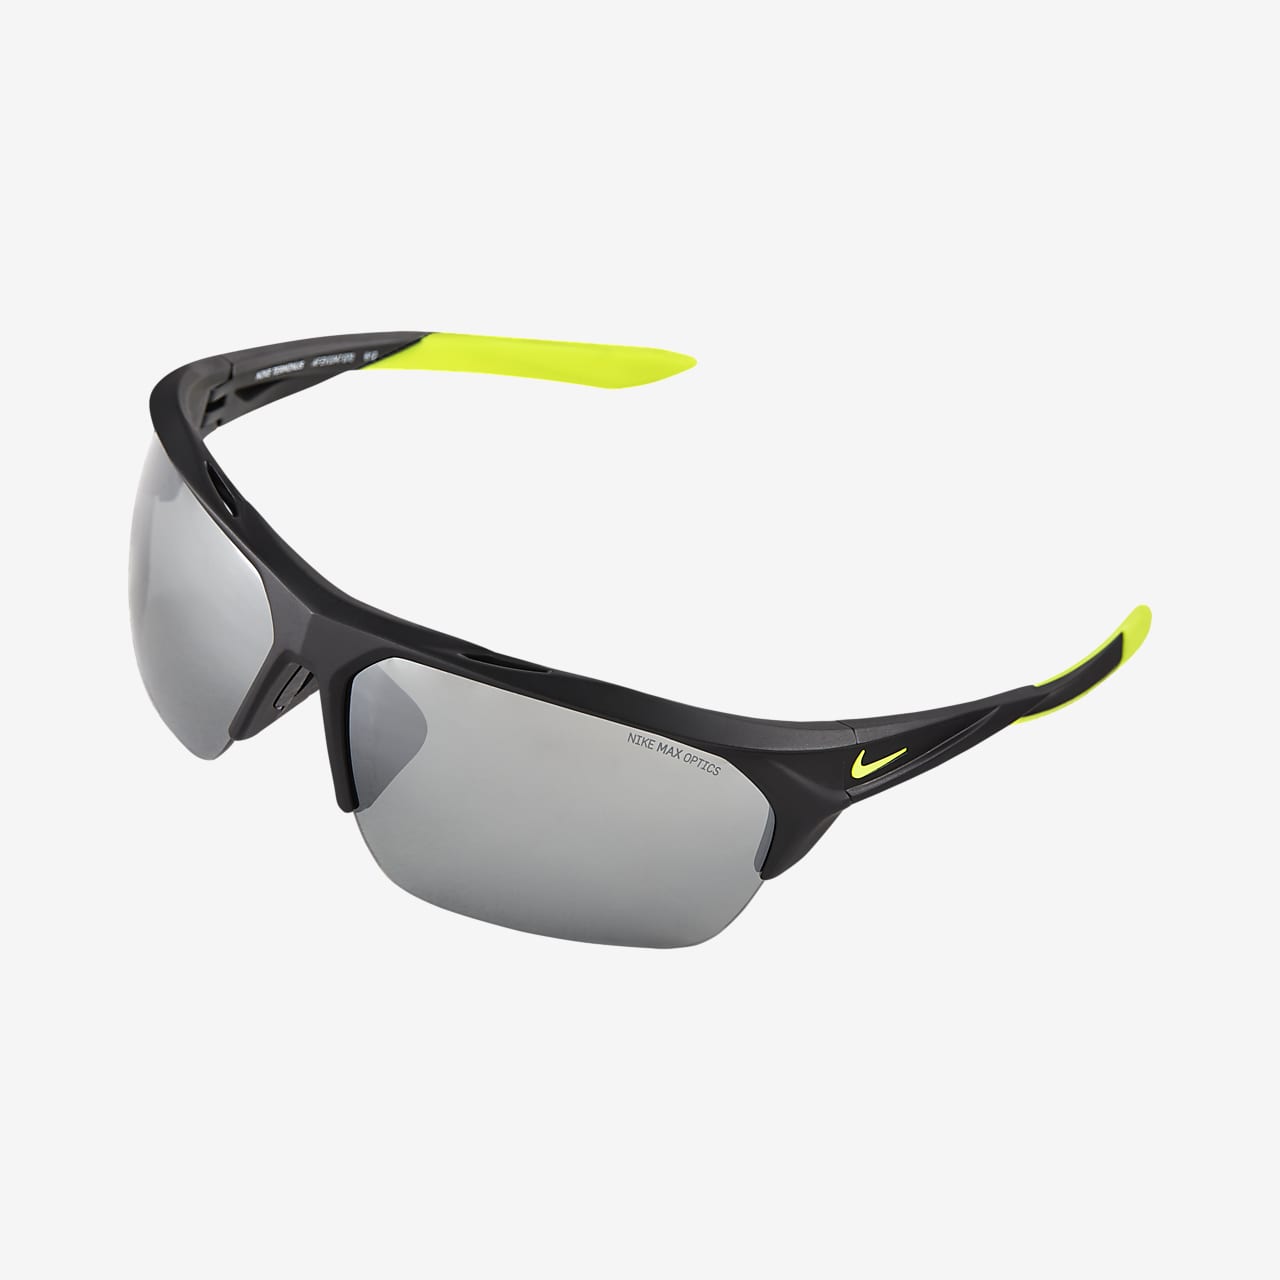 Nike Terminus Sunglasses